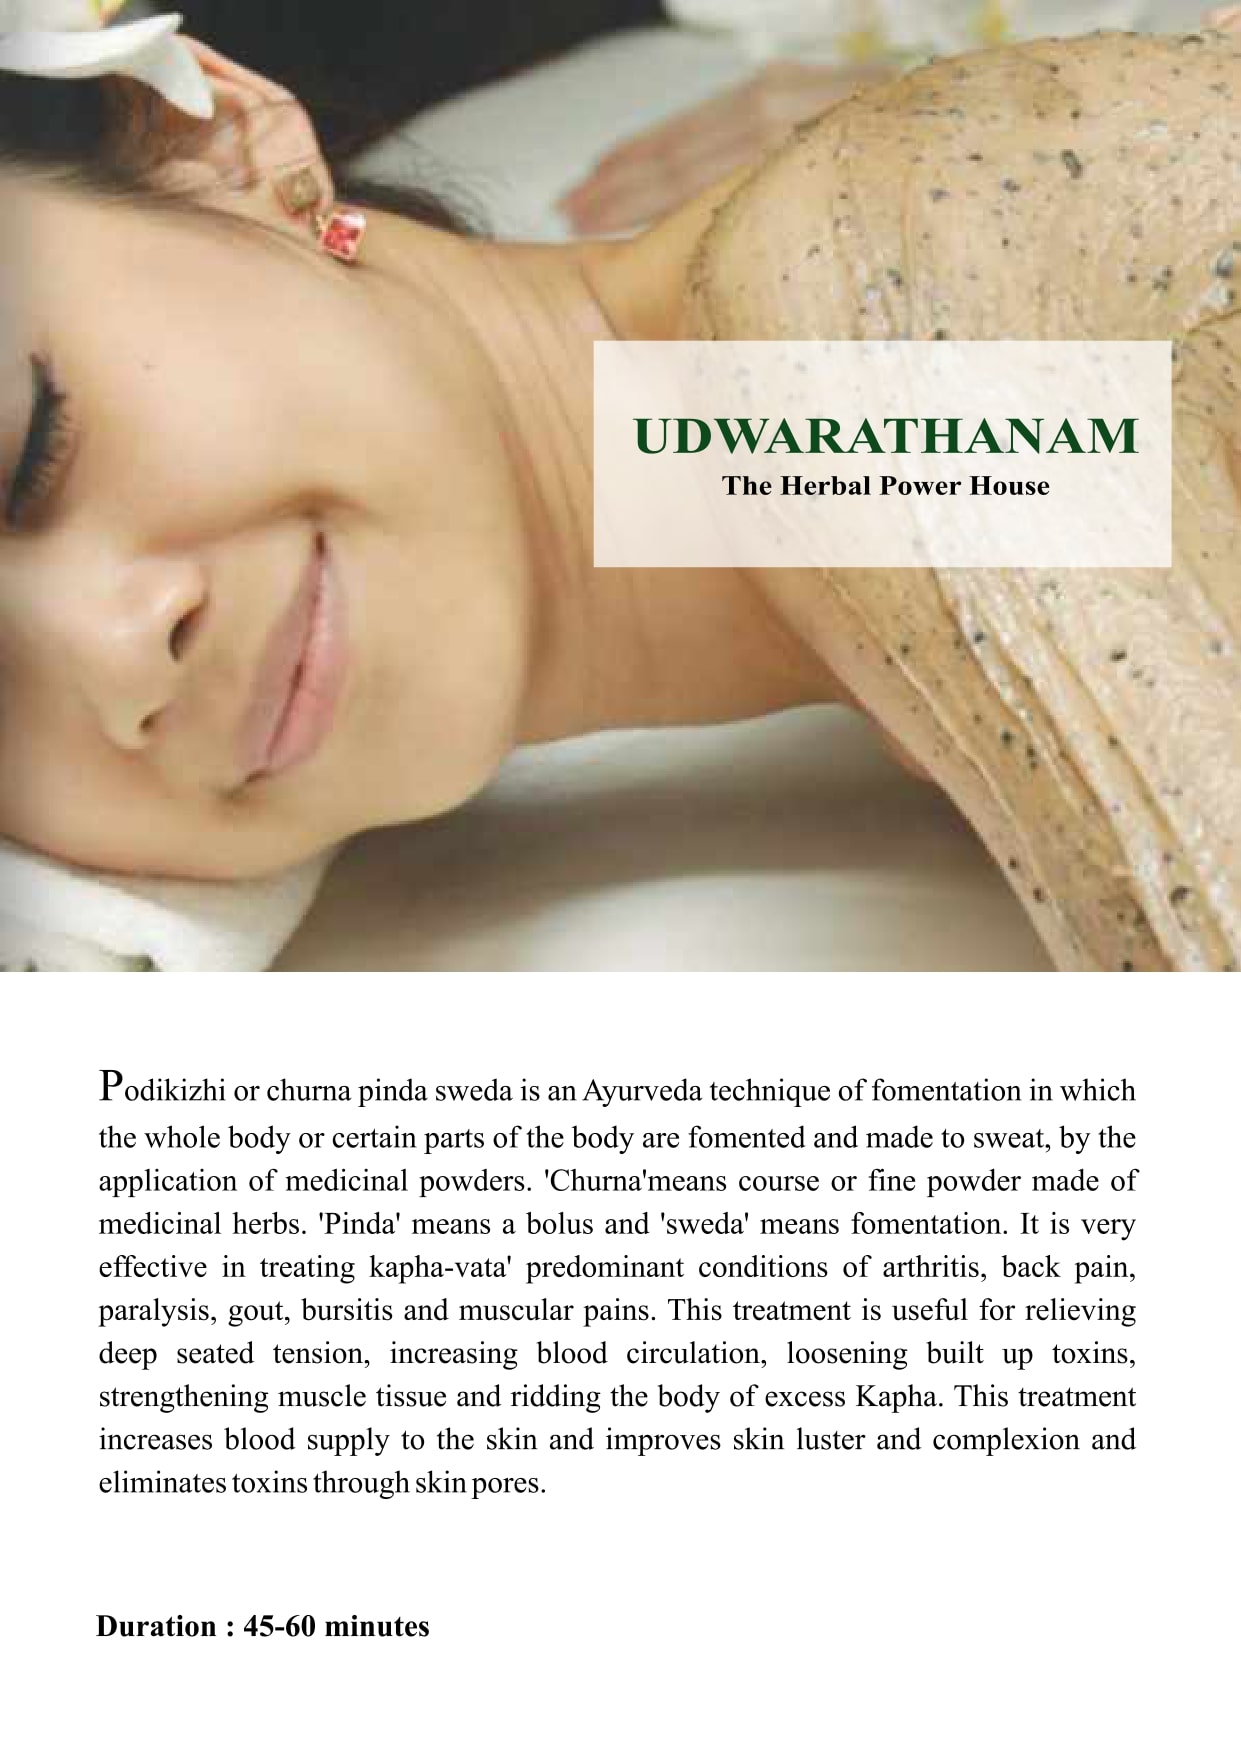 best panchakarma treatment in Kerala, India